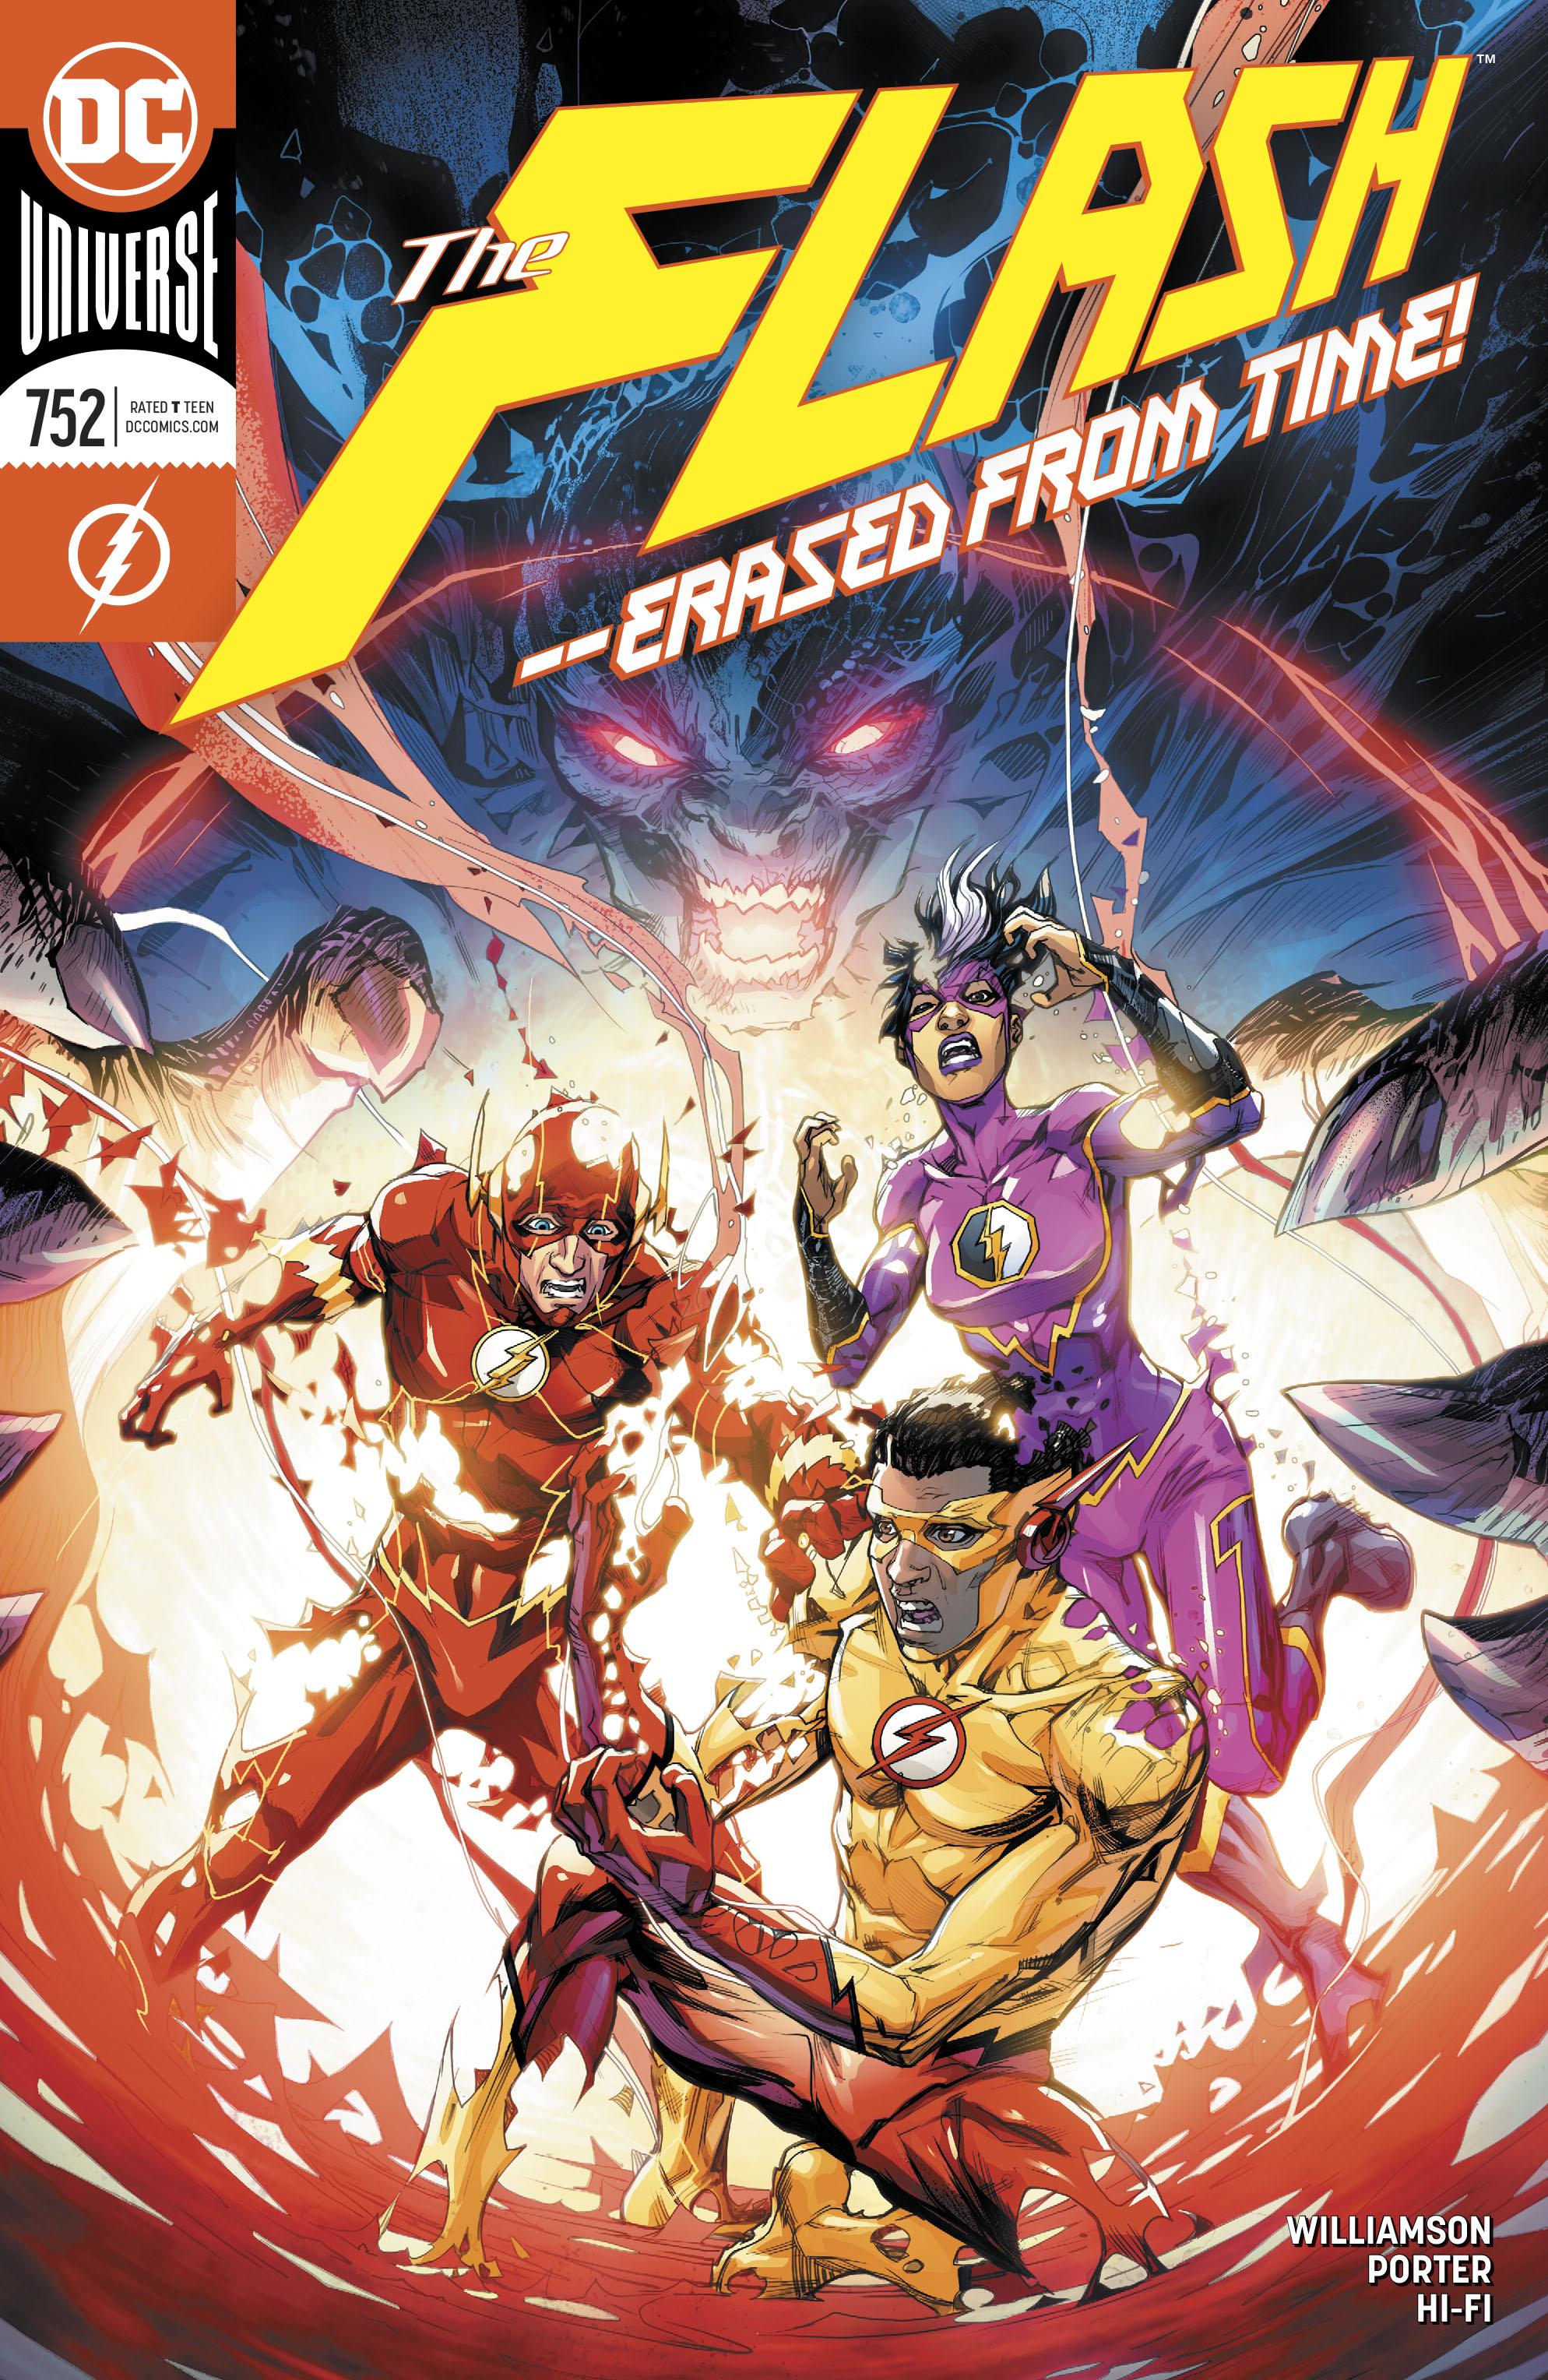 The Flash Vol. 1 #752